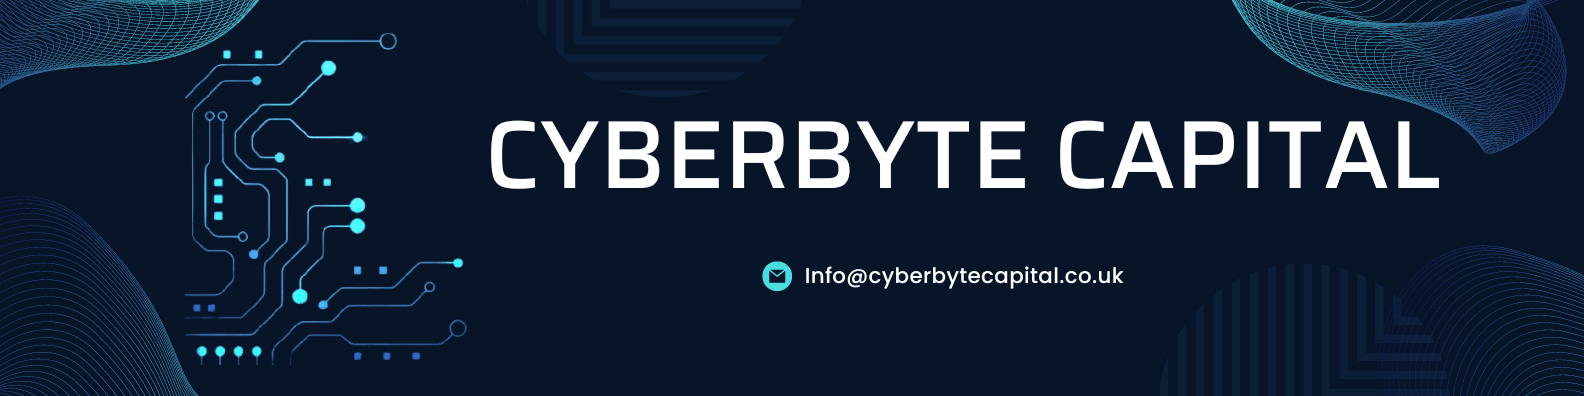 CyberByte-Capital 배너